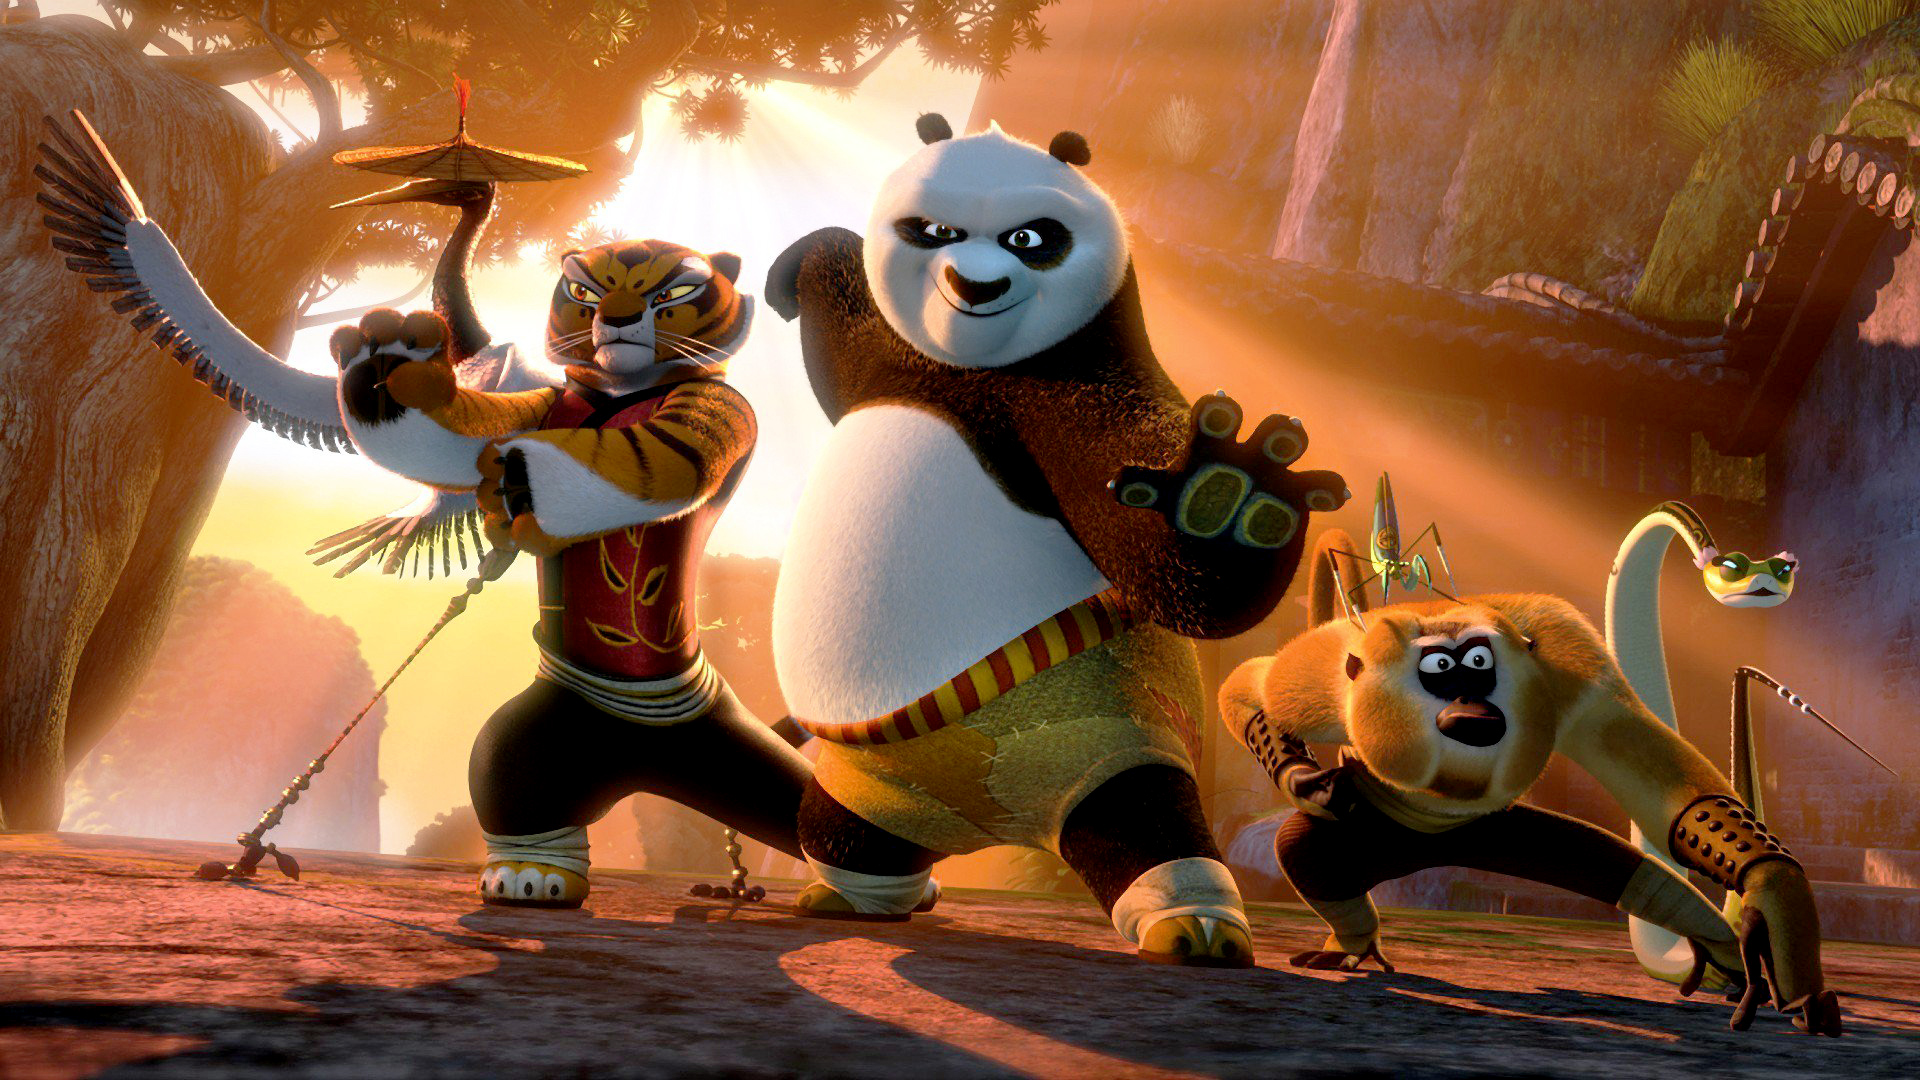 407228 descargar imagen po (kung fu panda), películas, kung fu panda 2, kung fu panda: fondos de pantalla y protectores de pantalla gratis